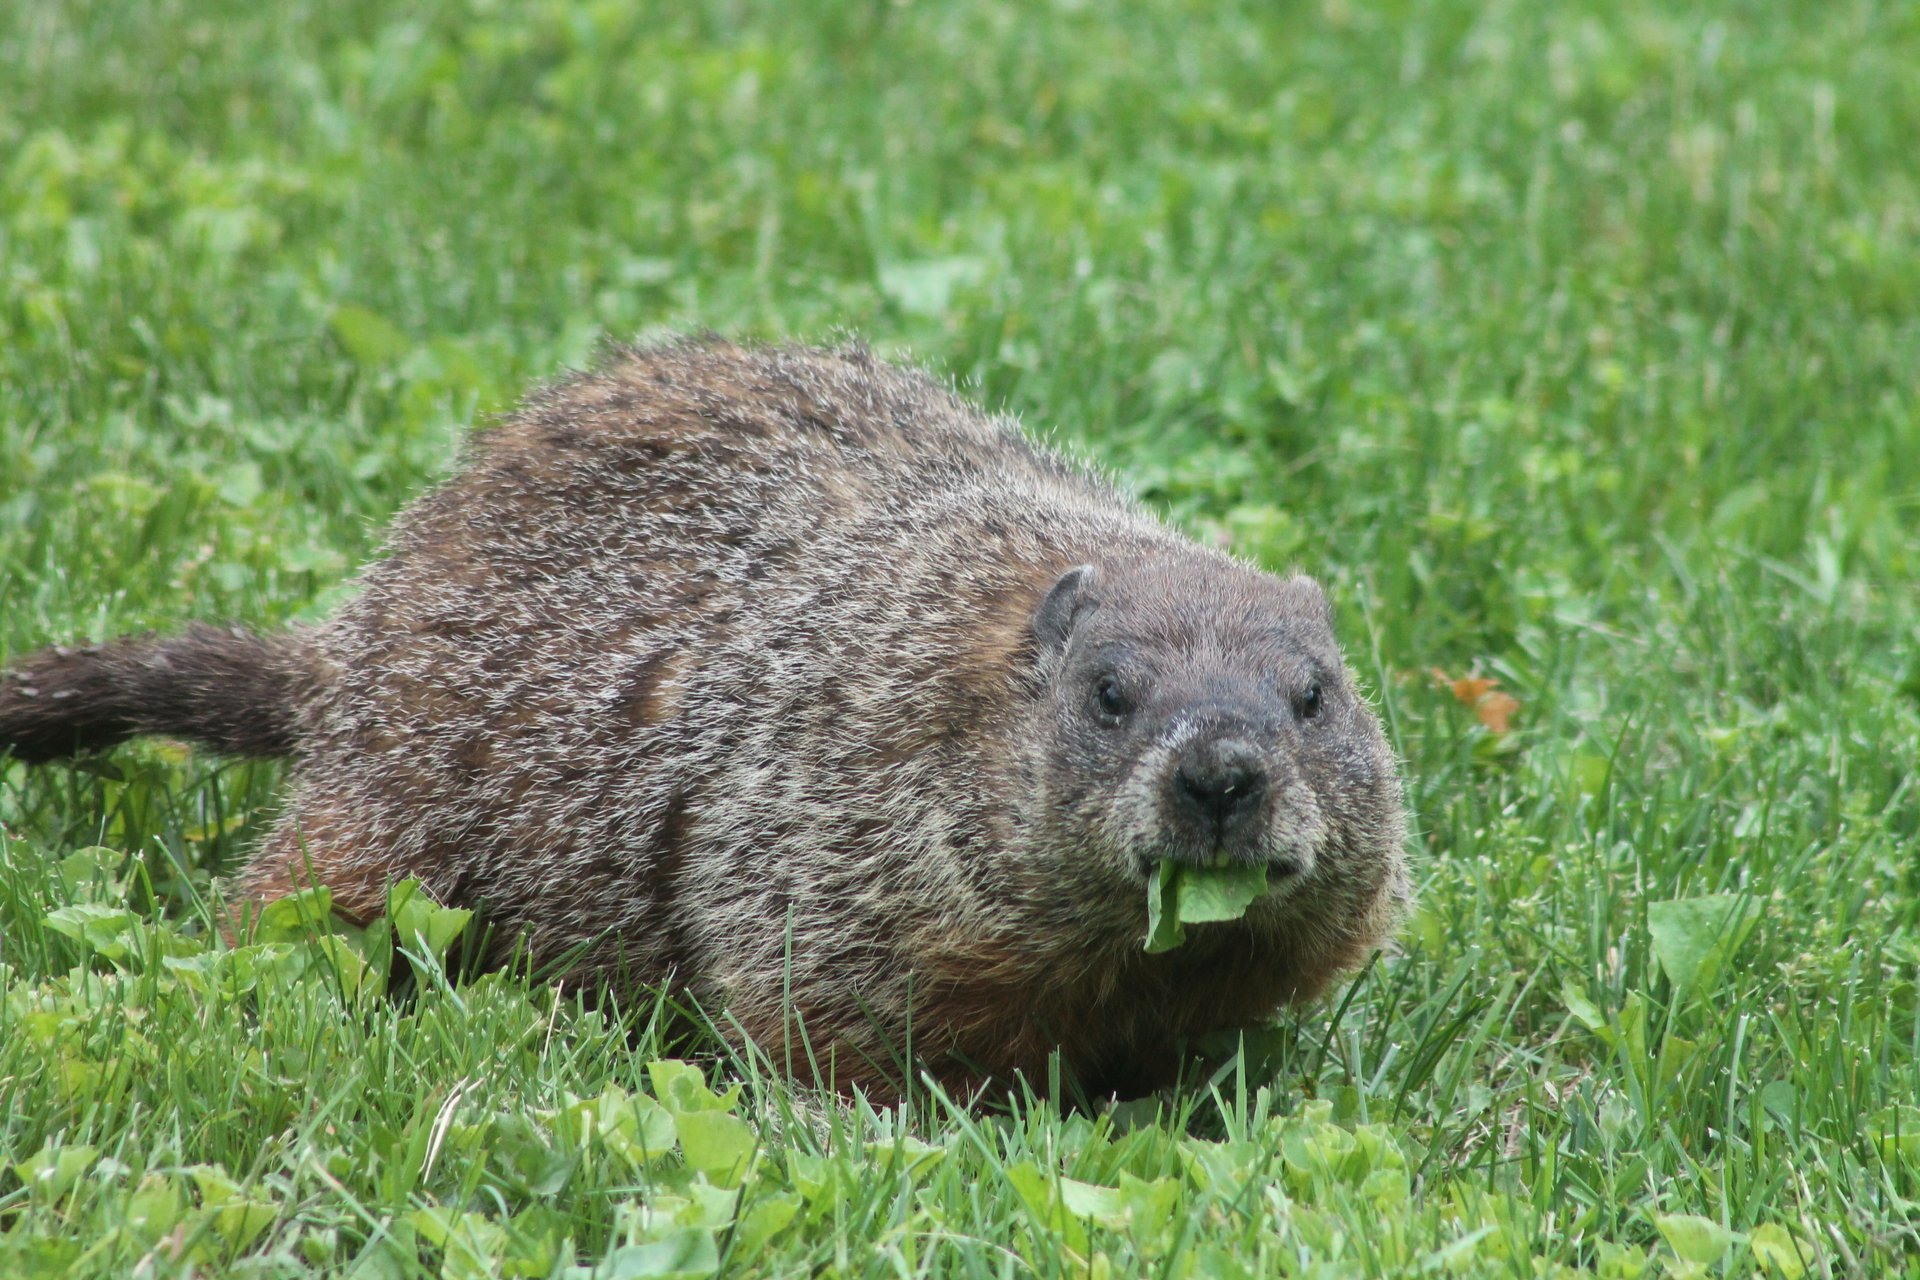 A groundhog on grass eating a leaf.